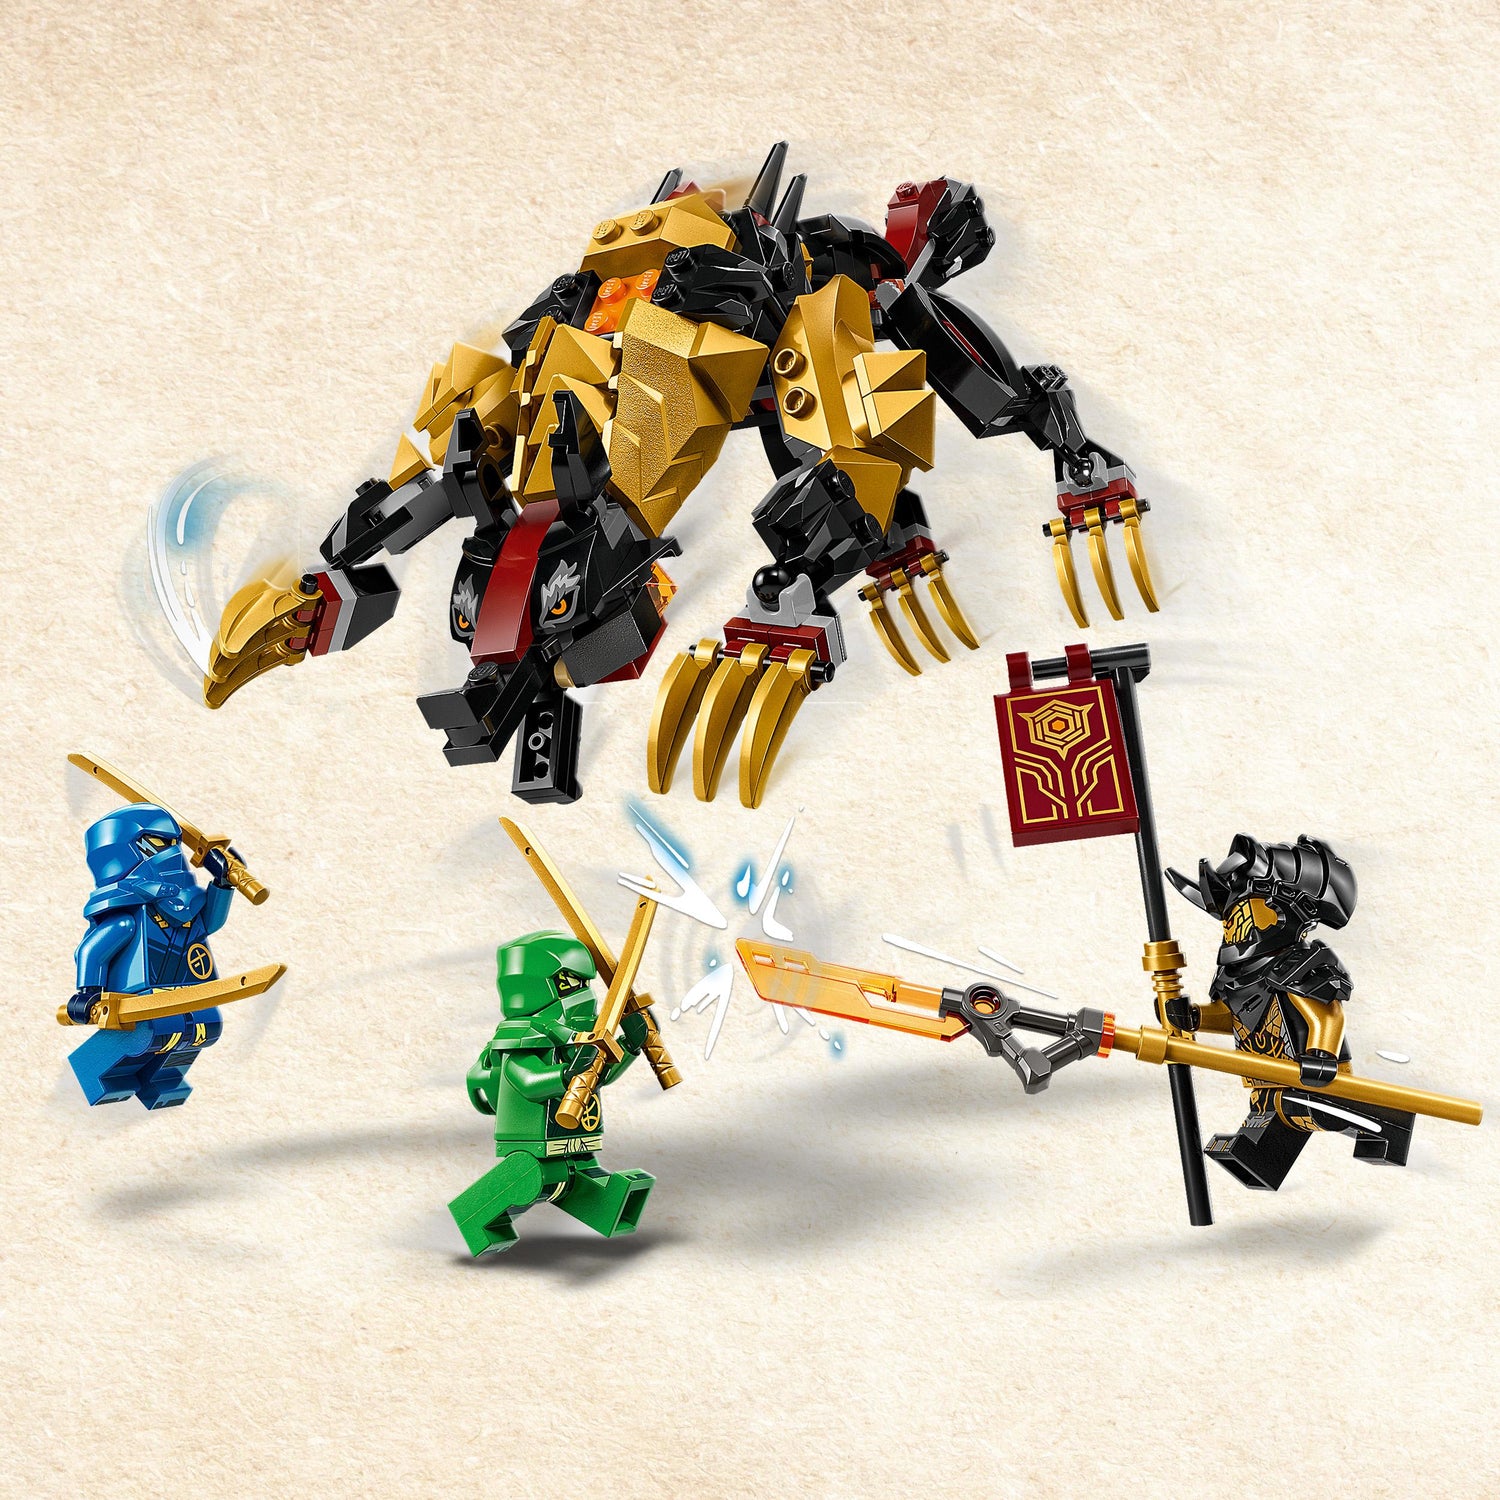 LEGO NINJAGO Imperium Dragon Hunter Hound Set